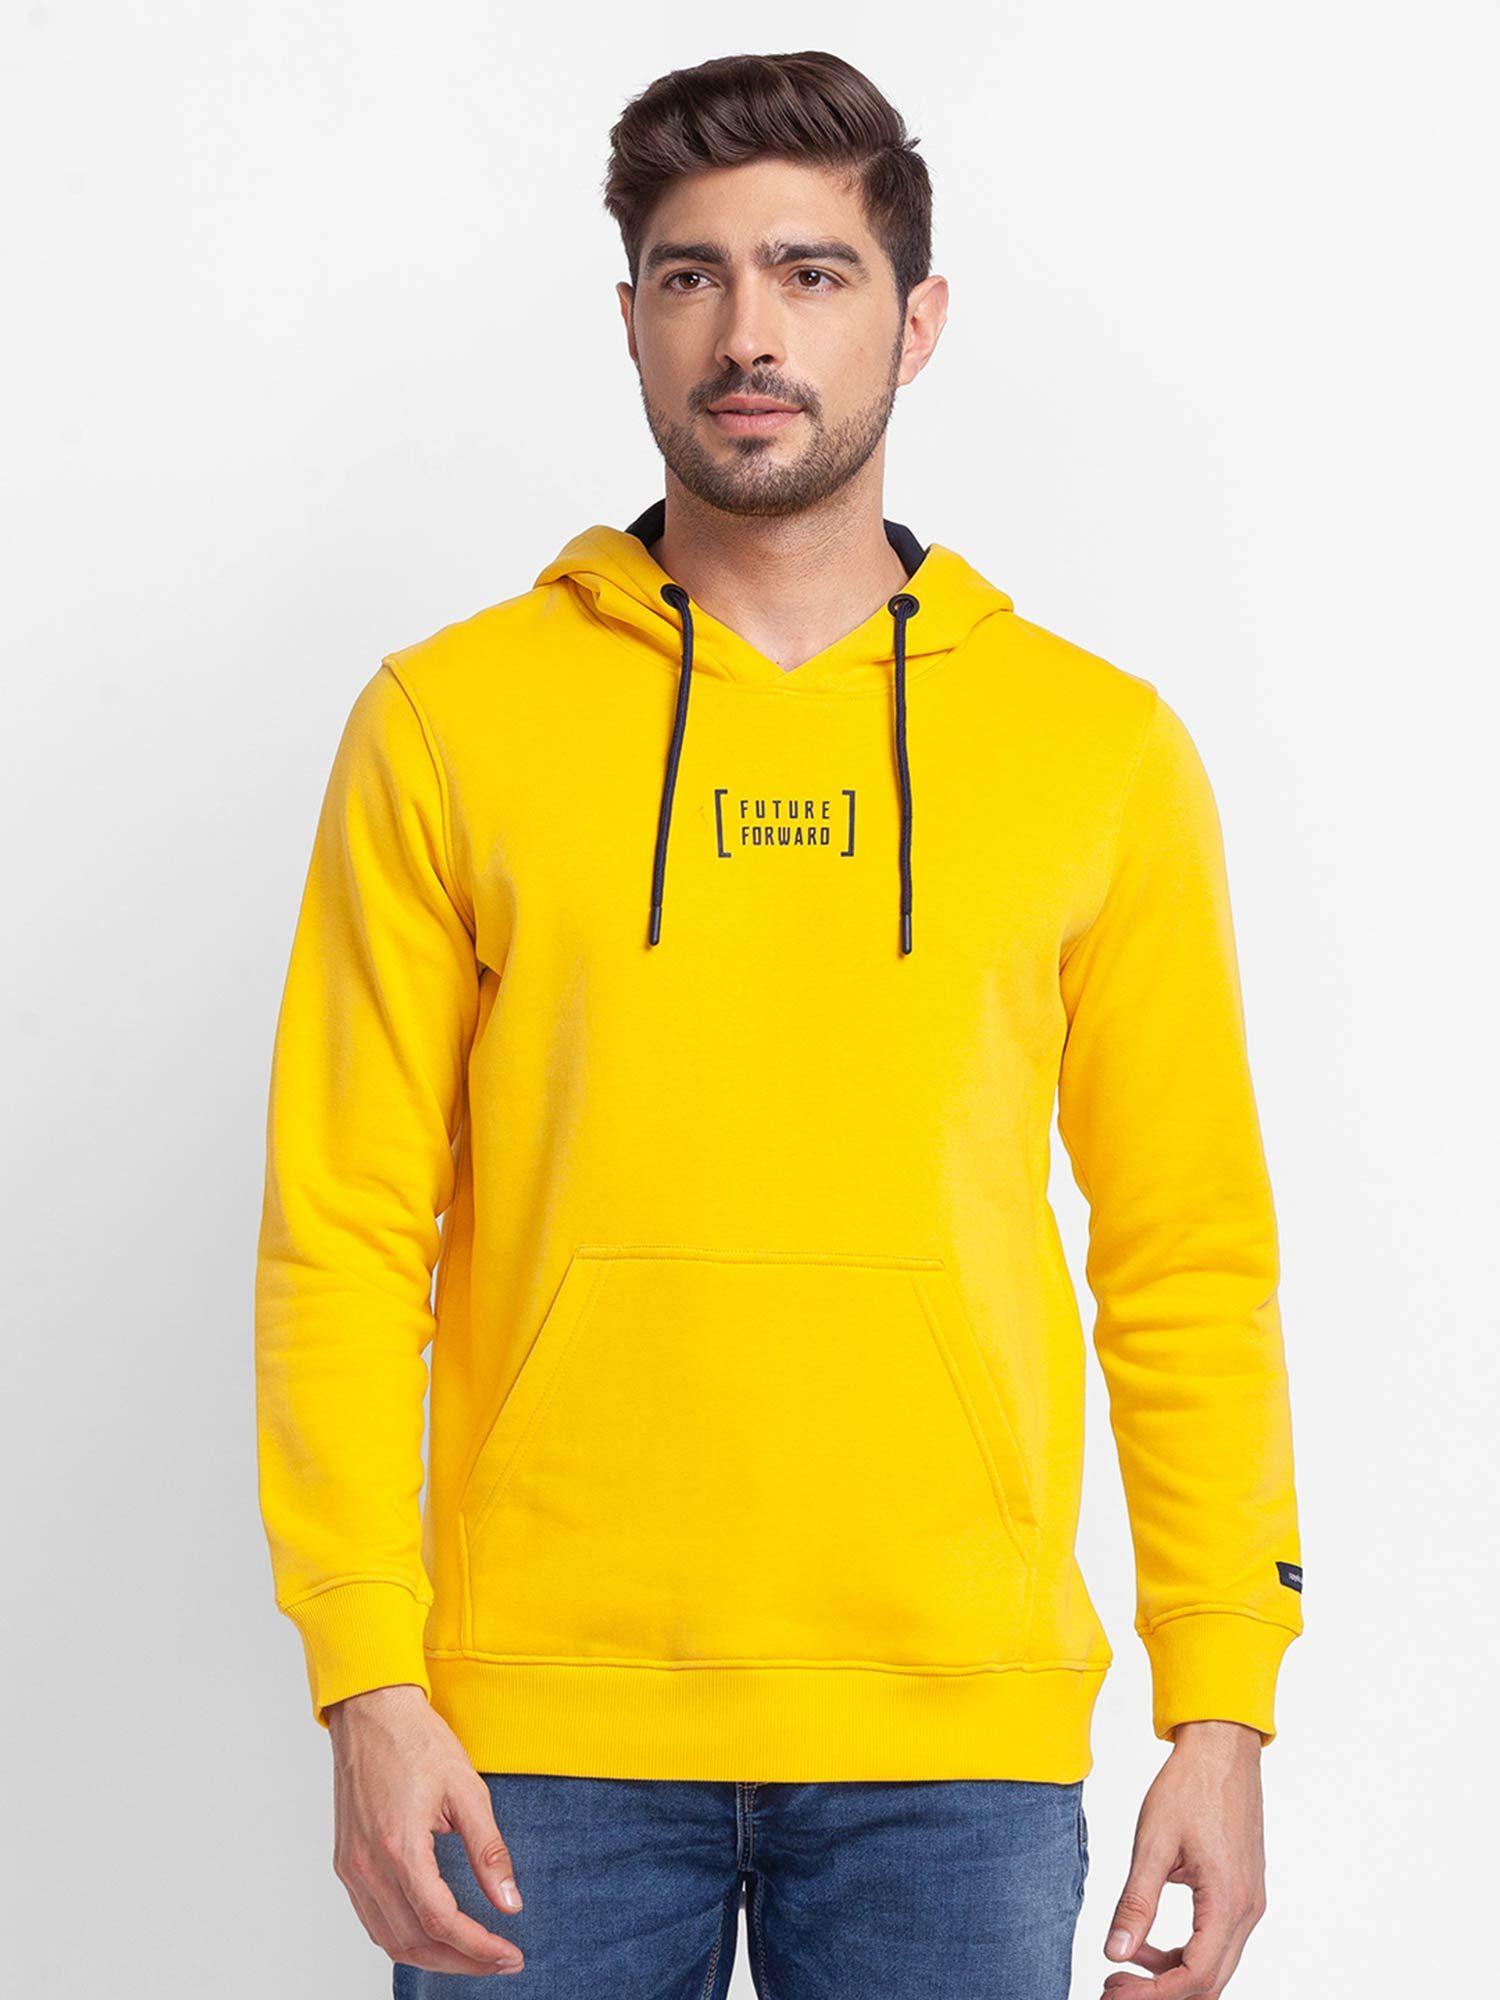 chrome-yellow-cotton-full-sleeve-hooded-sweatshirt-for-men